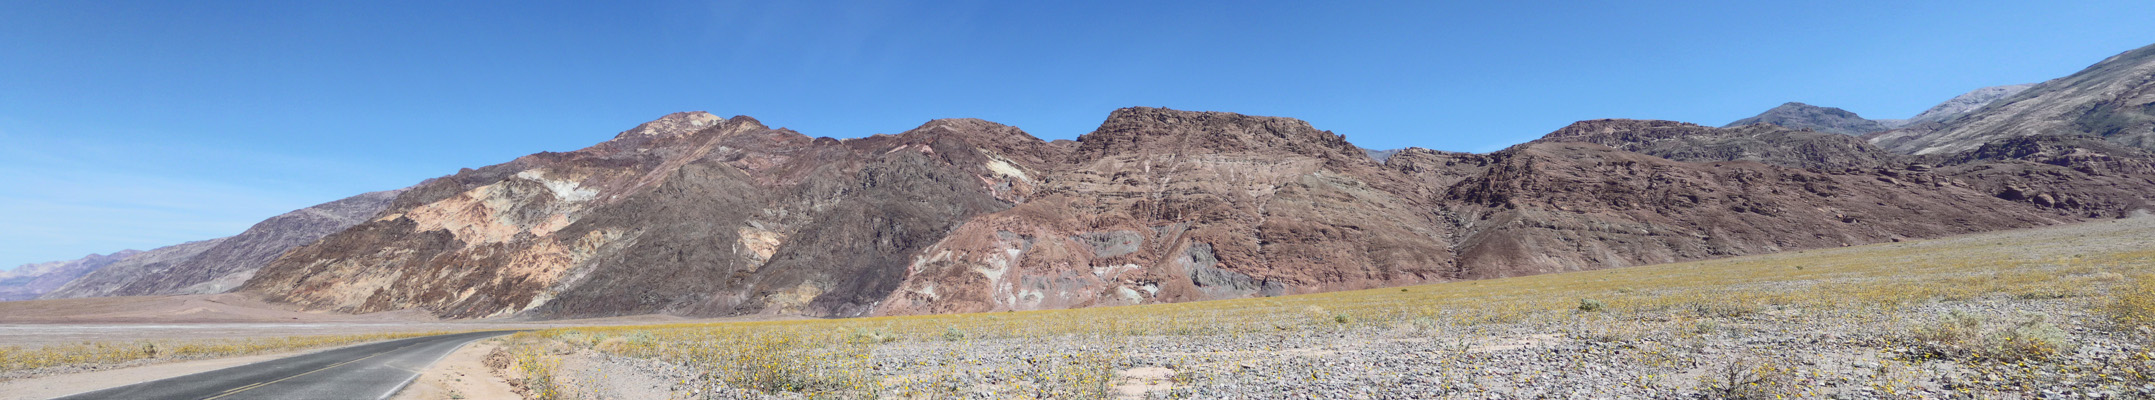 Almargosa Mts Death Valley